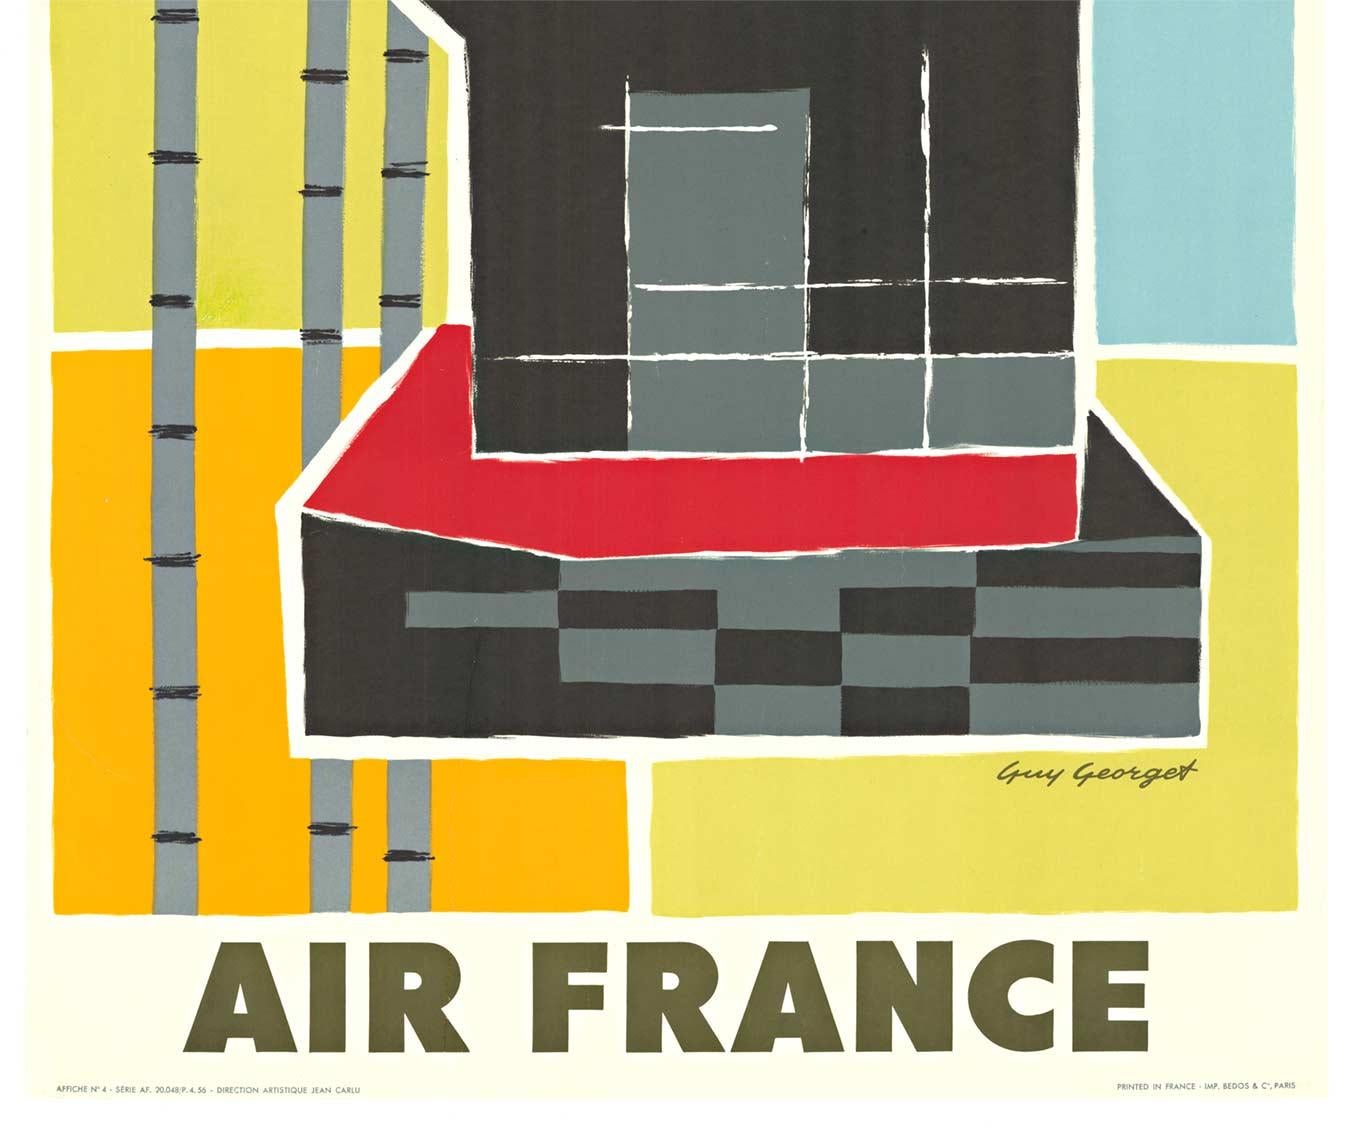 Original Air France Far-East vintage travel poster - Art Deco Print by Guy Georget